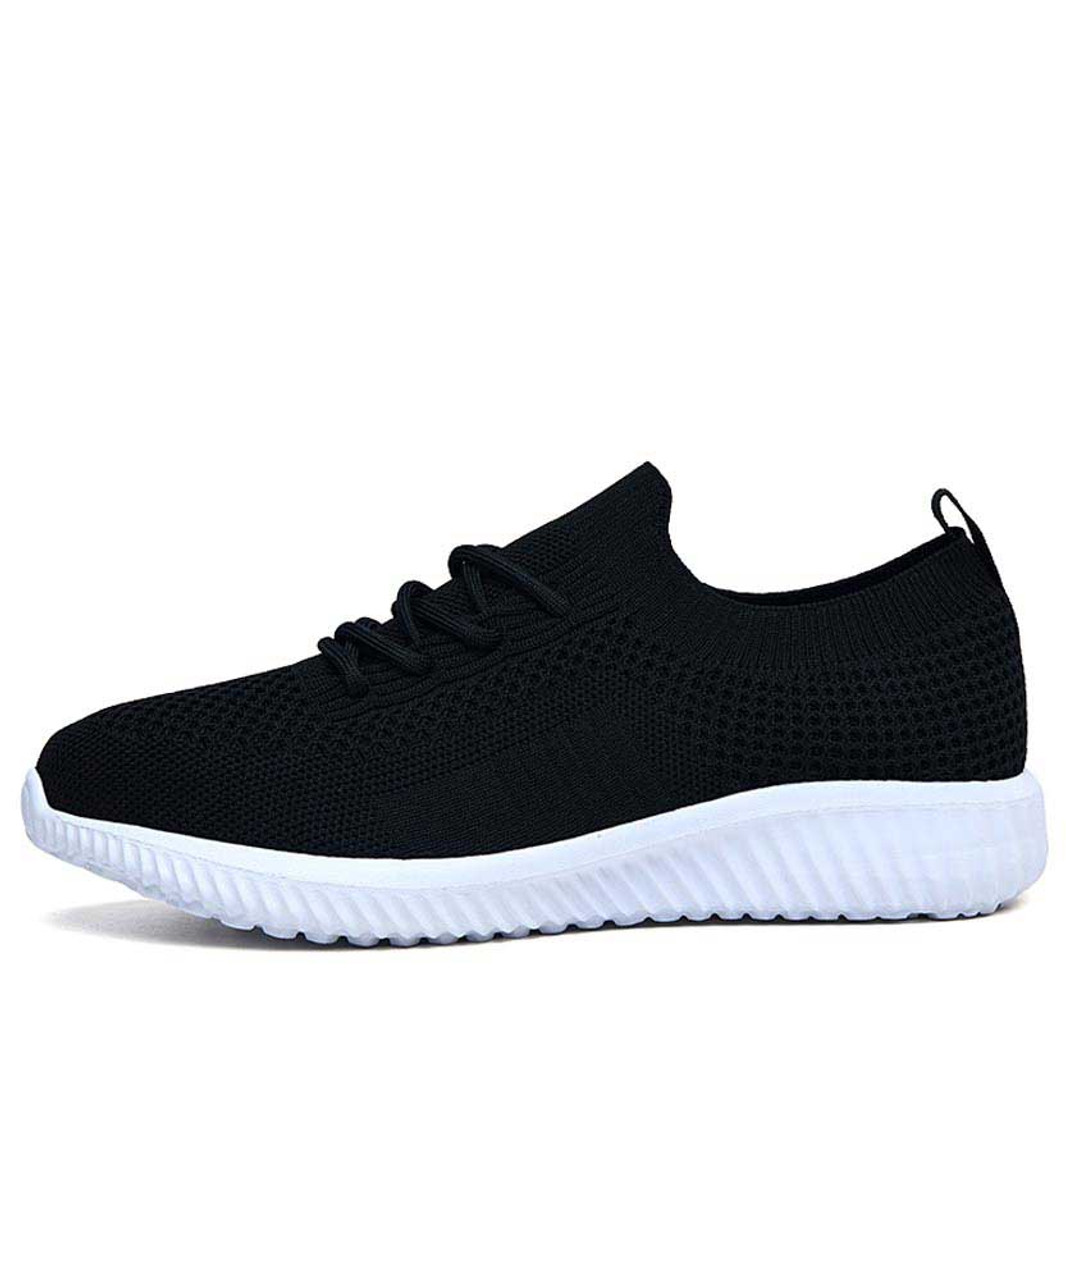 Black texture flyknit casual shoe sneaker | Womens sneakers shoes ...